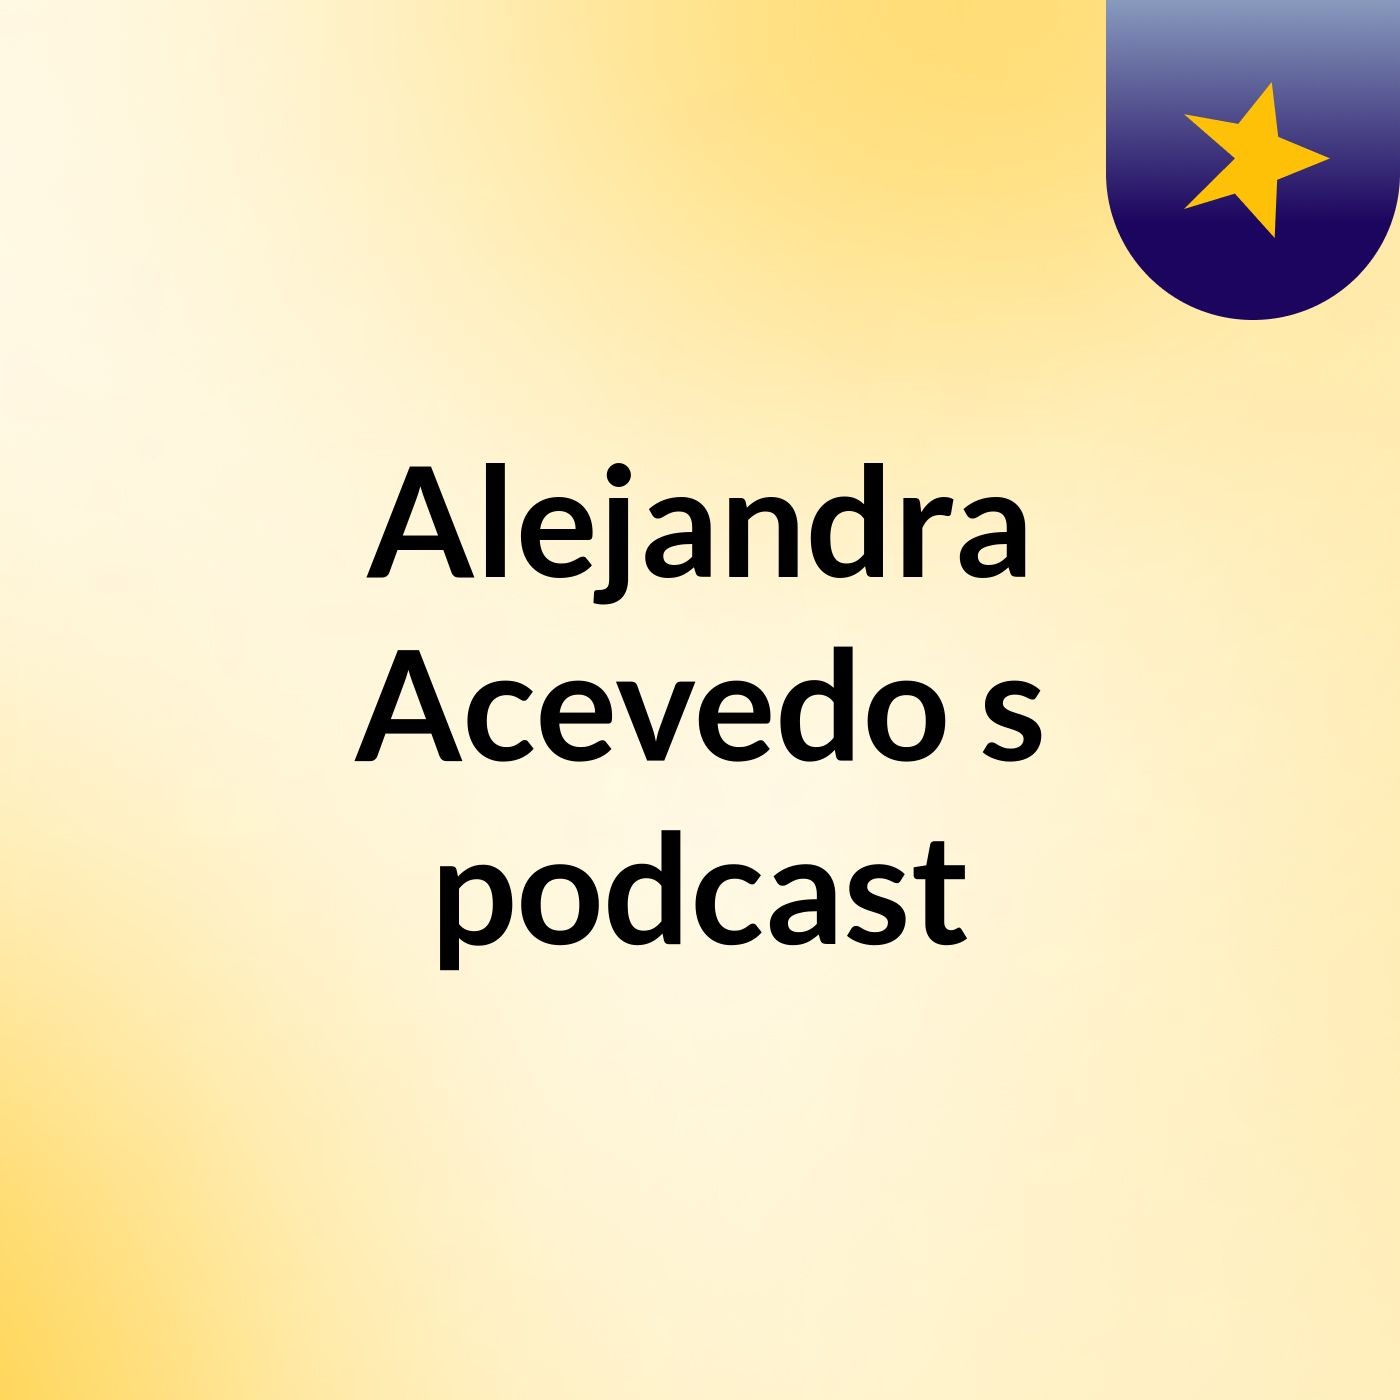 Alejandra Acevedo's podcast